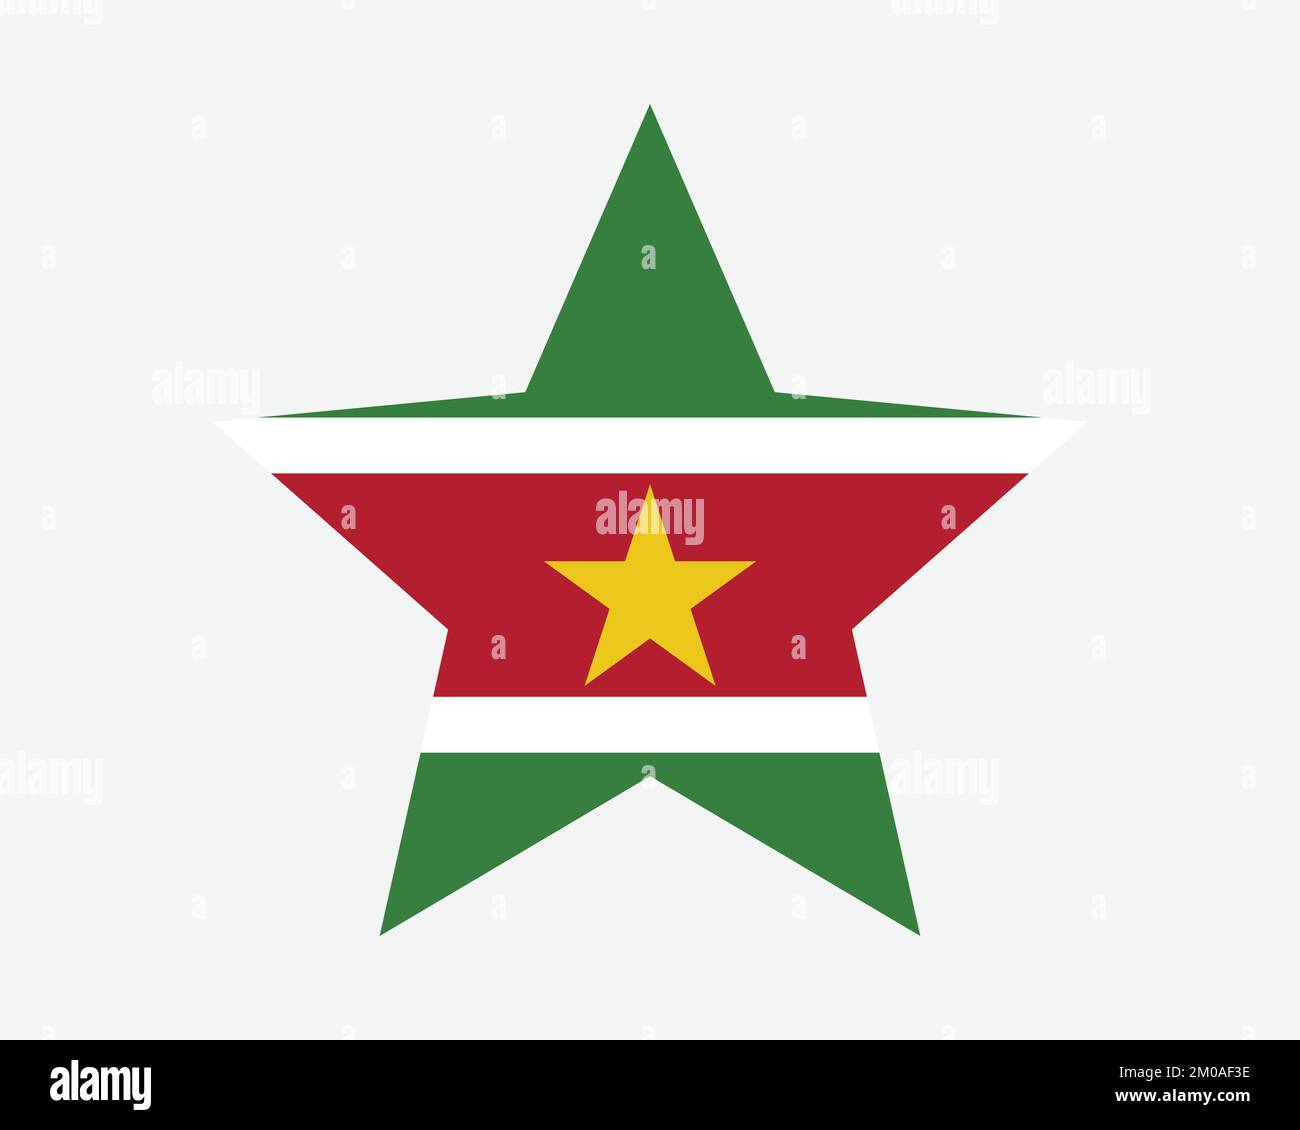 Suriname Star Flag. Surinamese Star Shape Flag. Republic of Suriname Country National Banner Icon Symbol Vector Flat Artwork Graphic Illustration Stock Vector